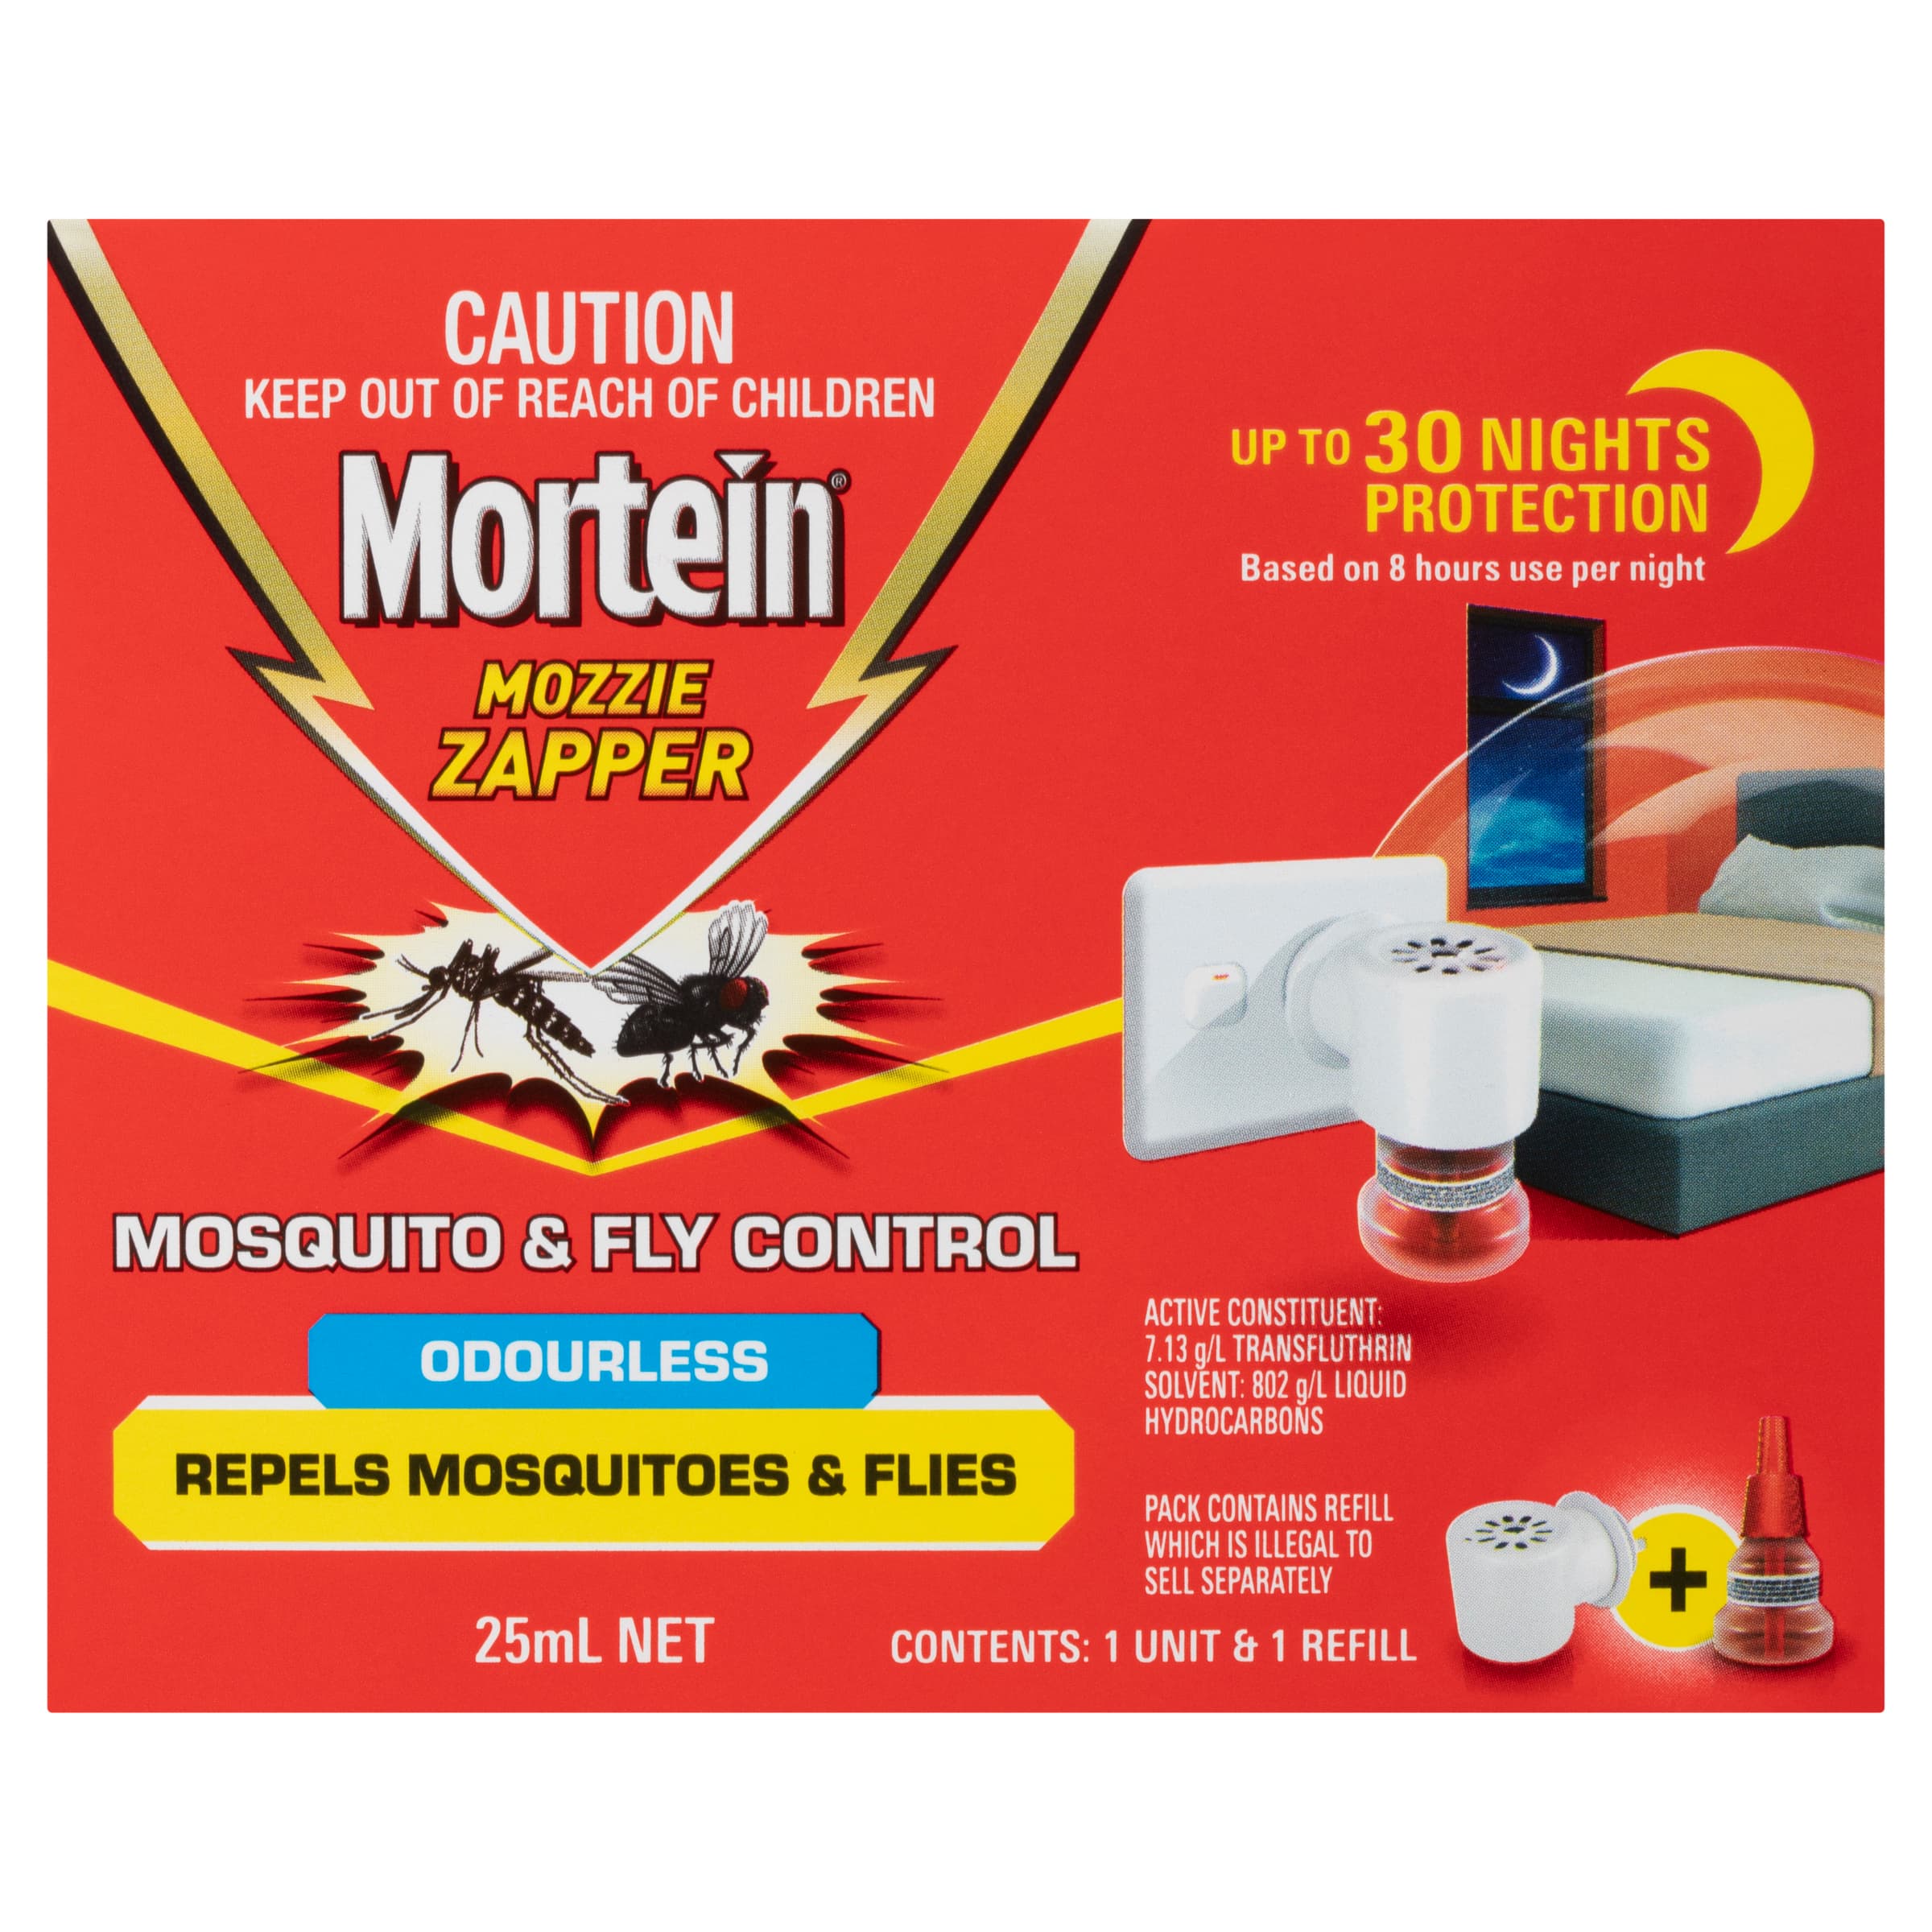 Mortein Mozzie Zapper Mosquito & Fly Control 25mL